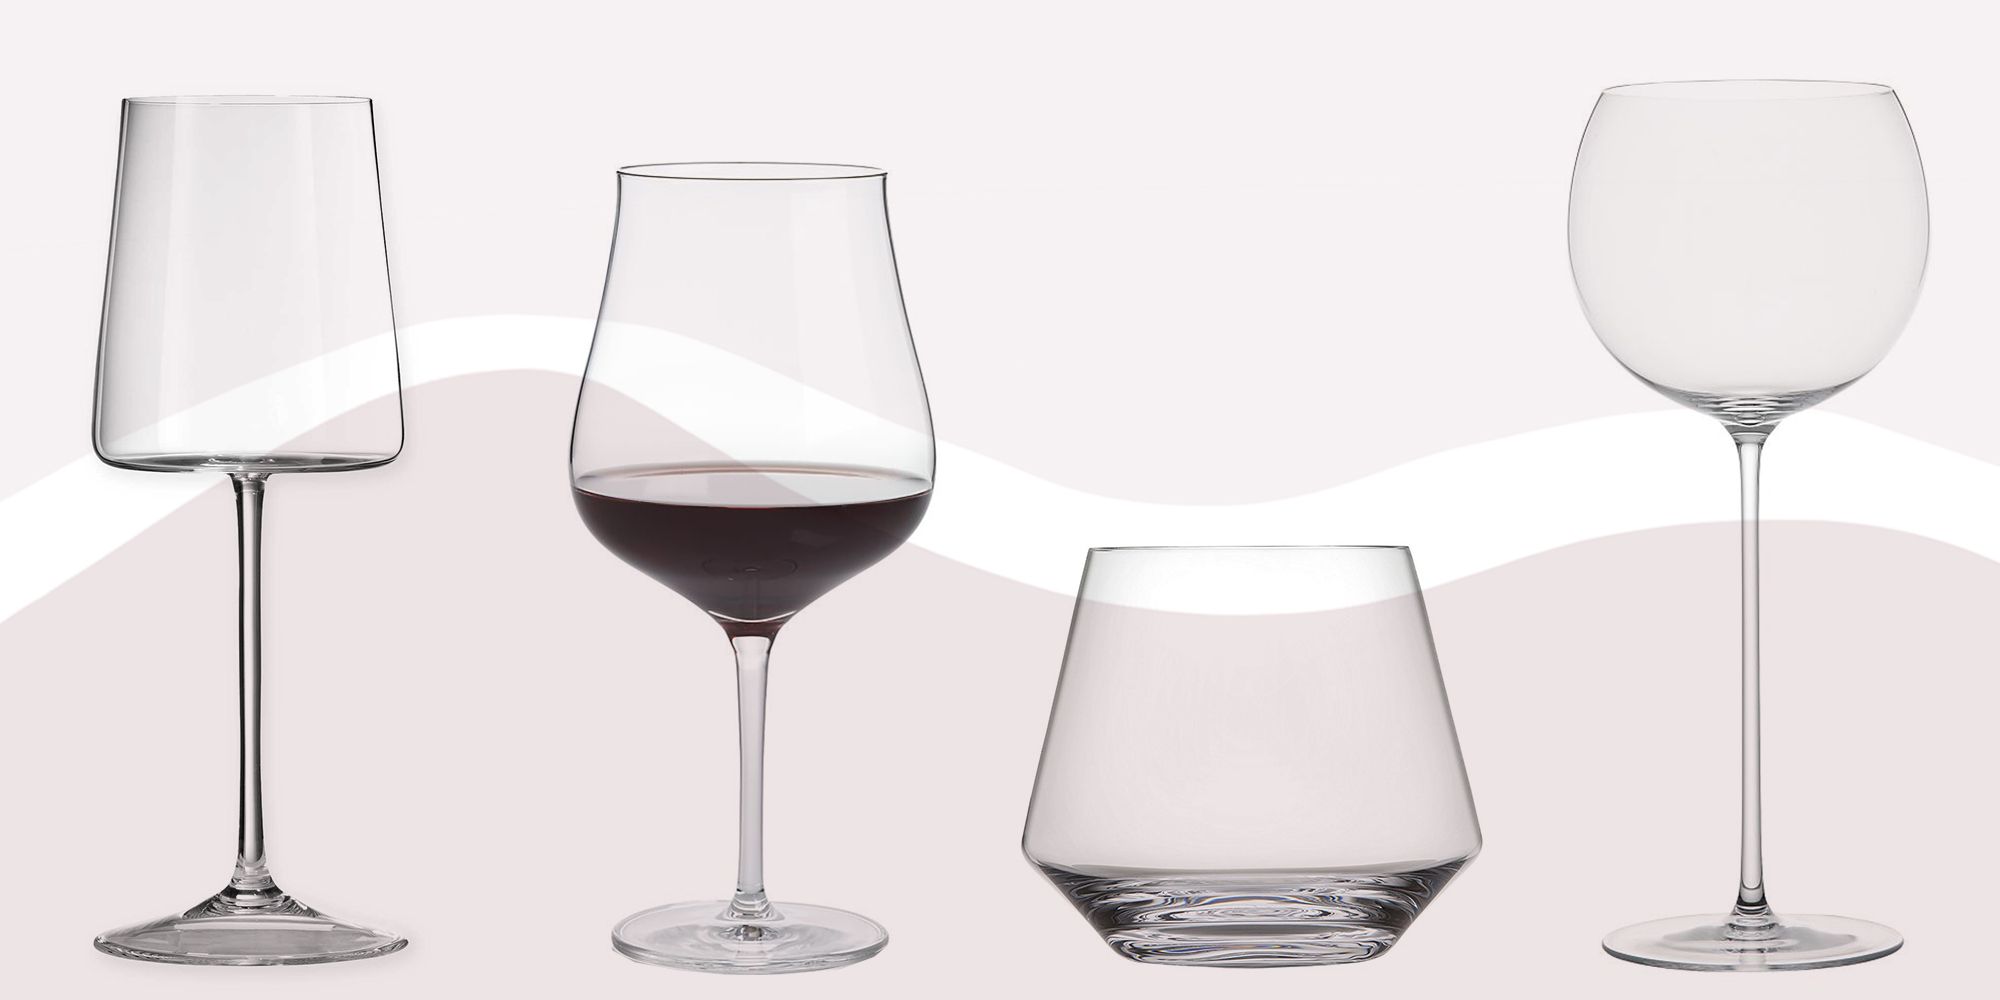 Rona Crystal Pinot Noir Wine Glass